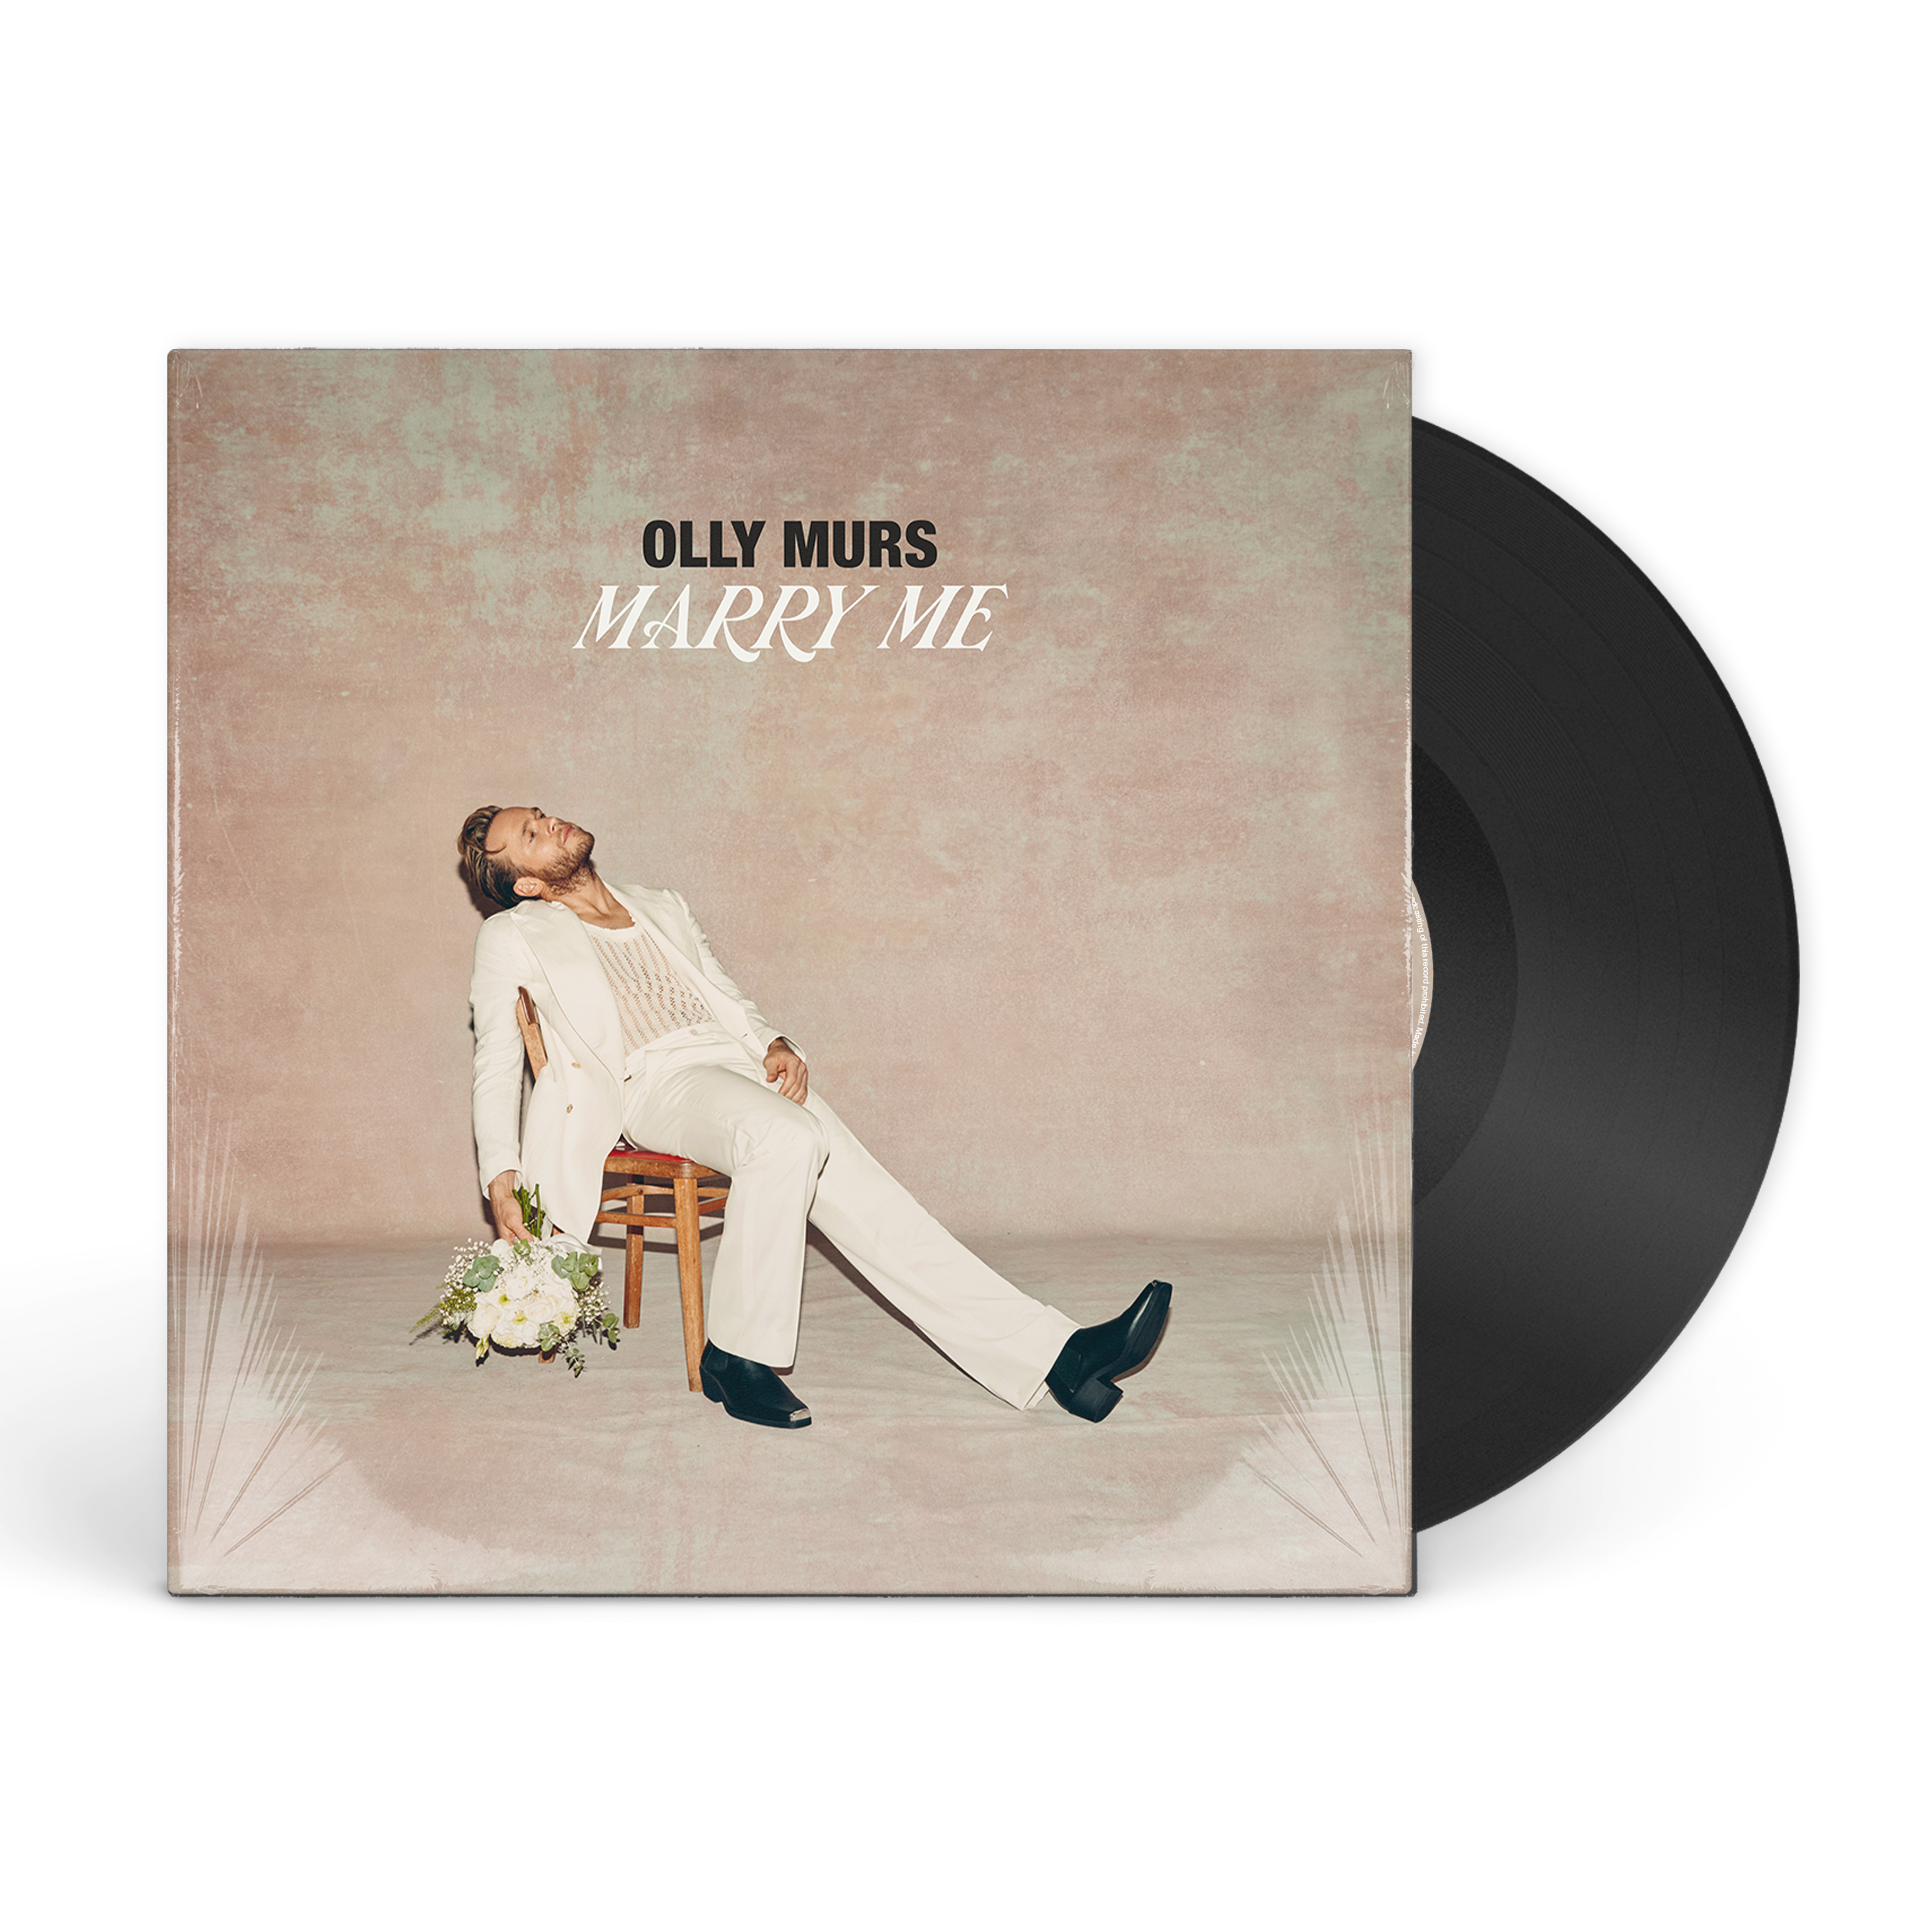 Olly Murs - Marry Me: Vinyl LP